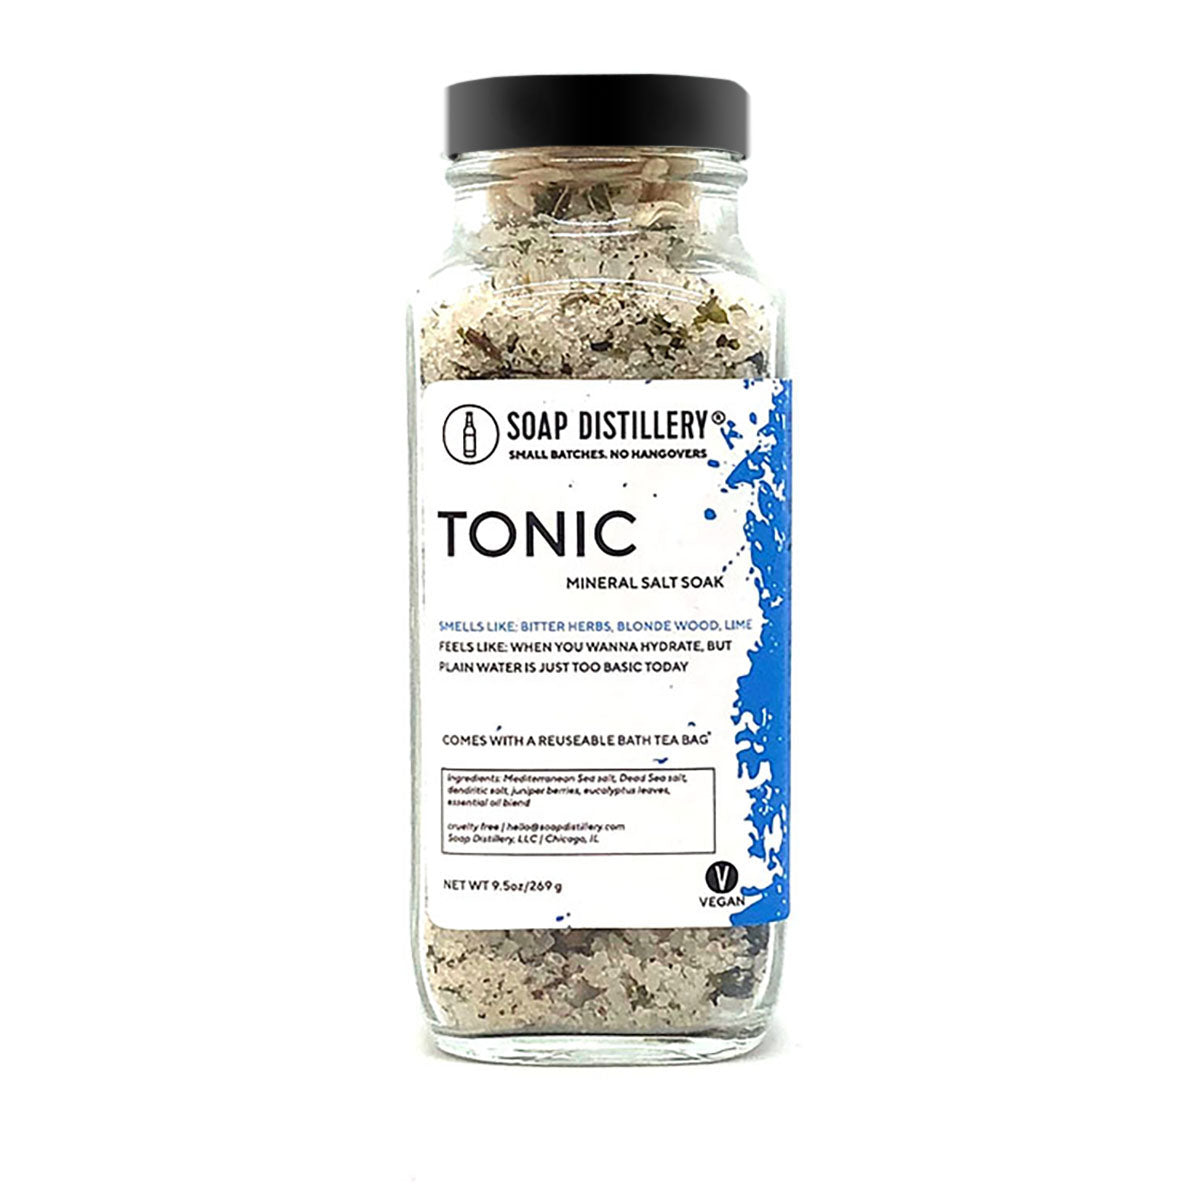 Tonic Mineral Salt Soak